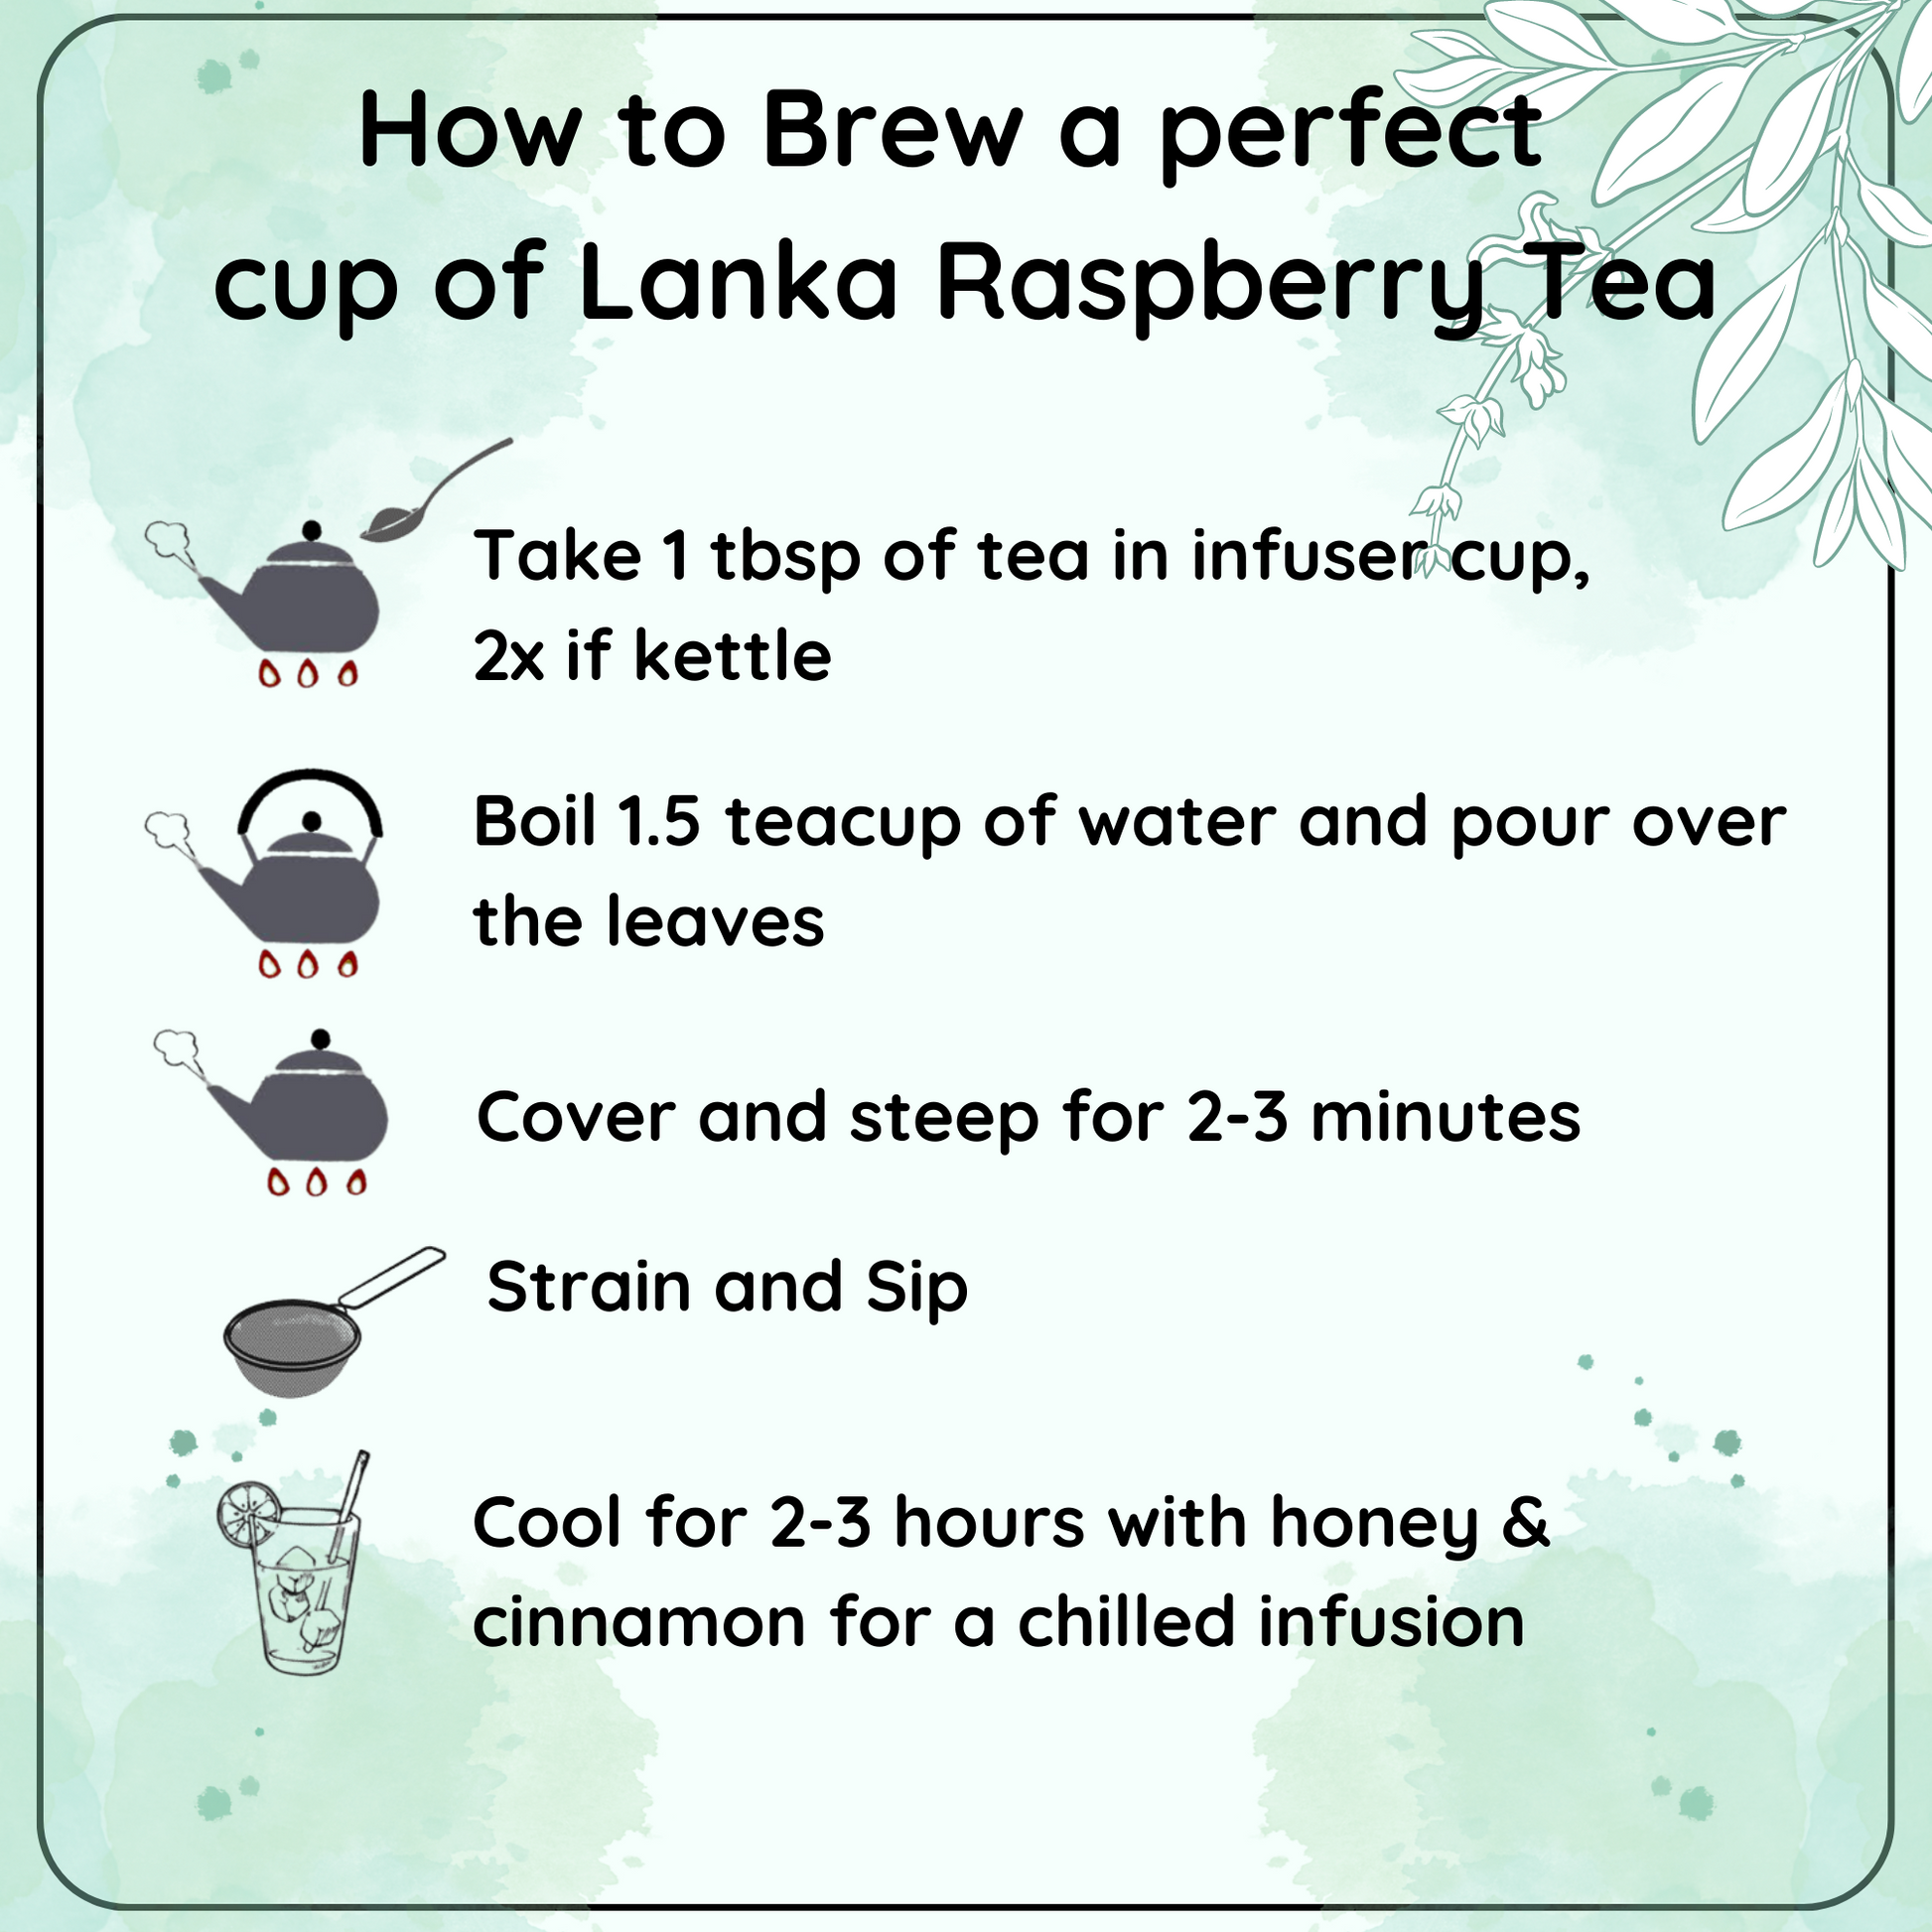 RADIANCE Lanka Raspberry Tea - How to boost your health and mood - Radhikas Fine Teas and Whatnots